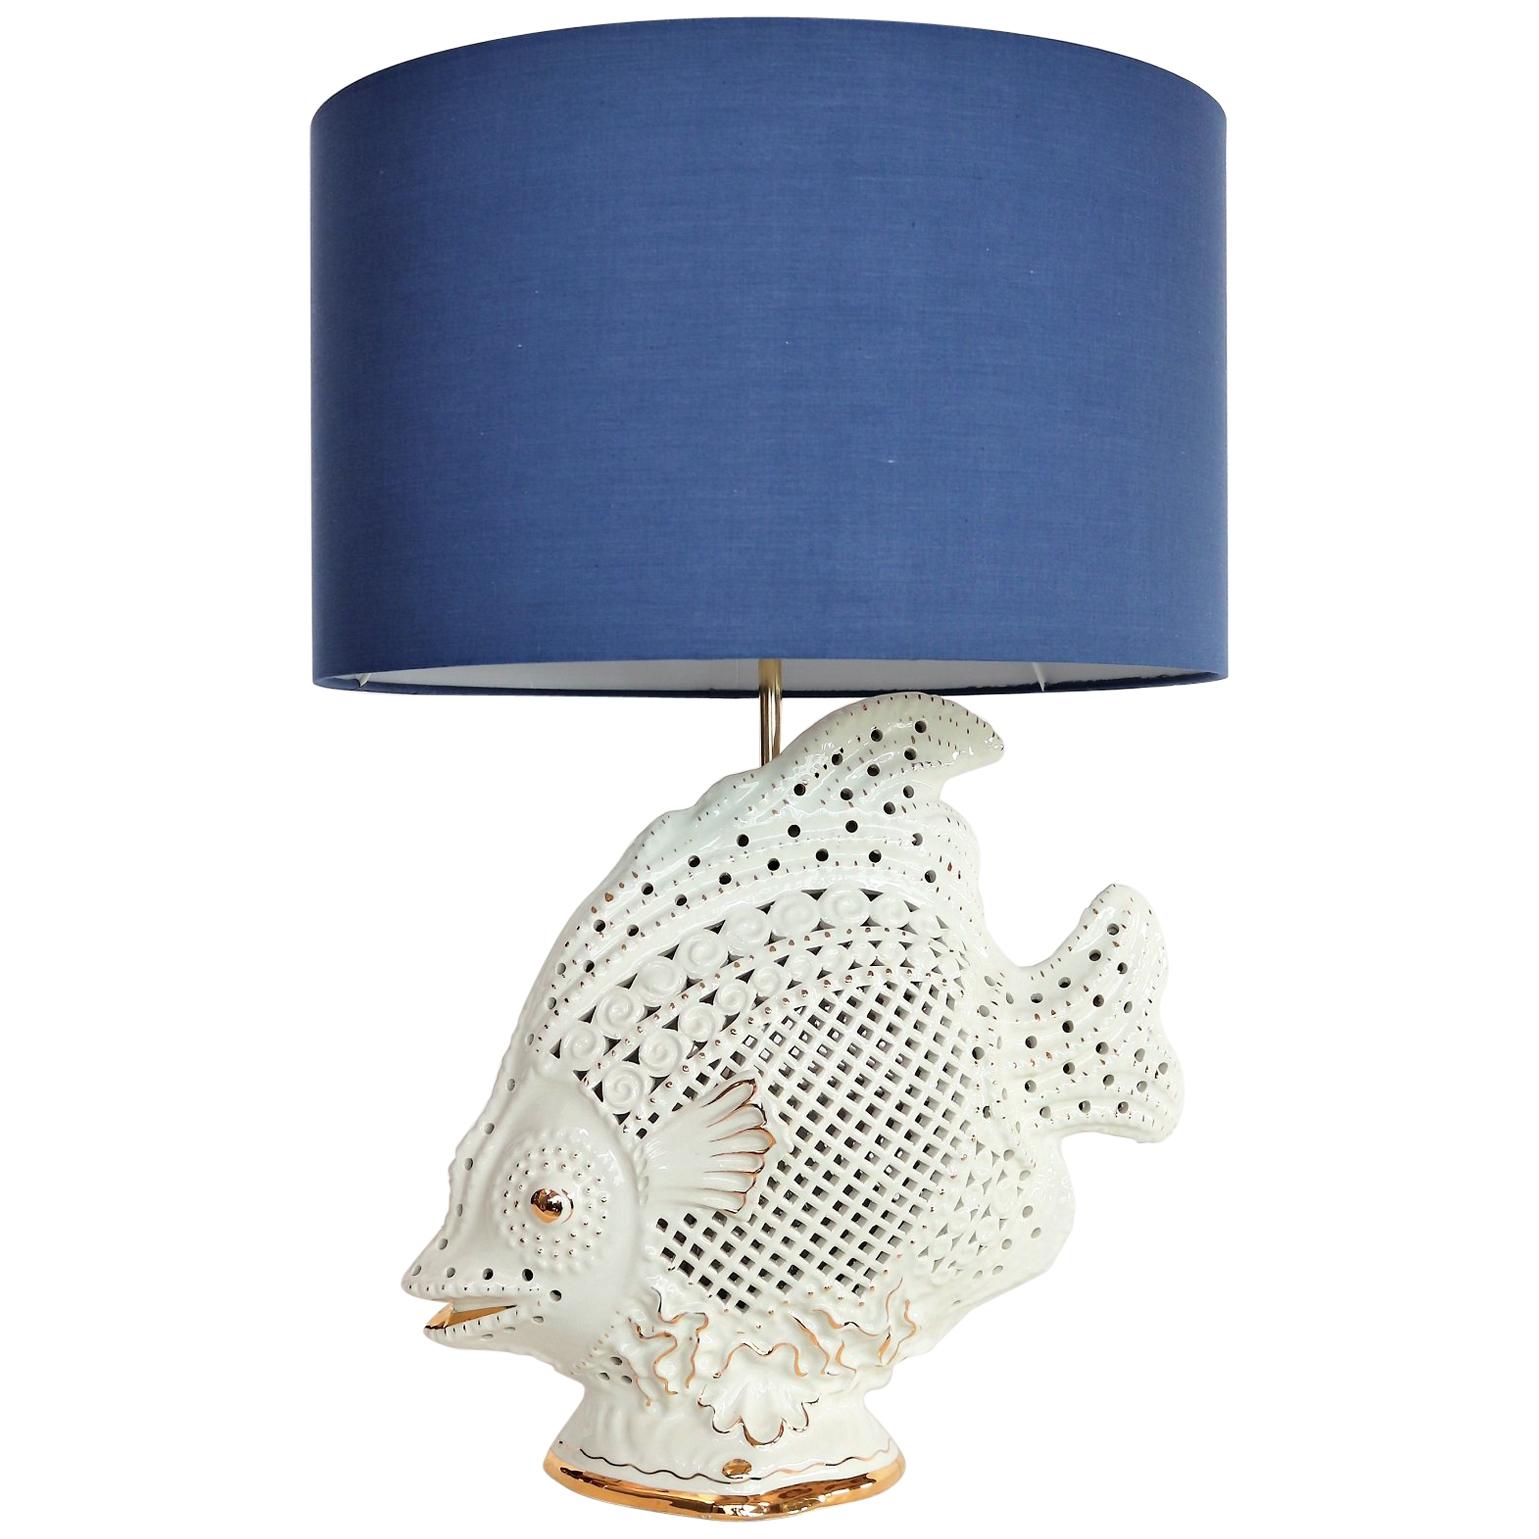 Italian Midcentury Big Ceramic Fish Lamp with Brass Details, 1960s